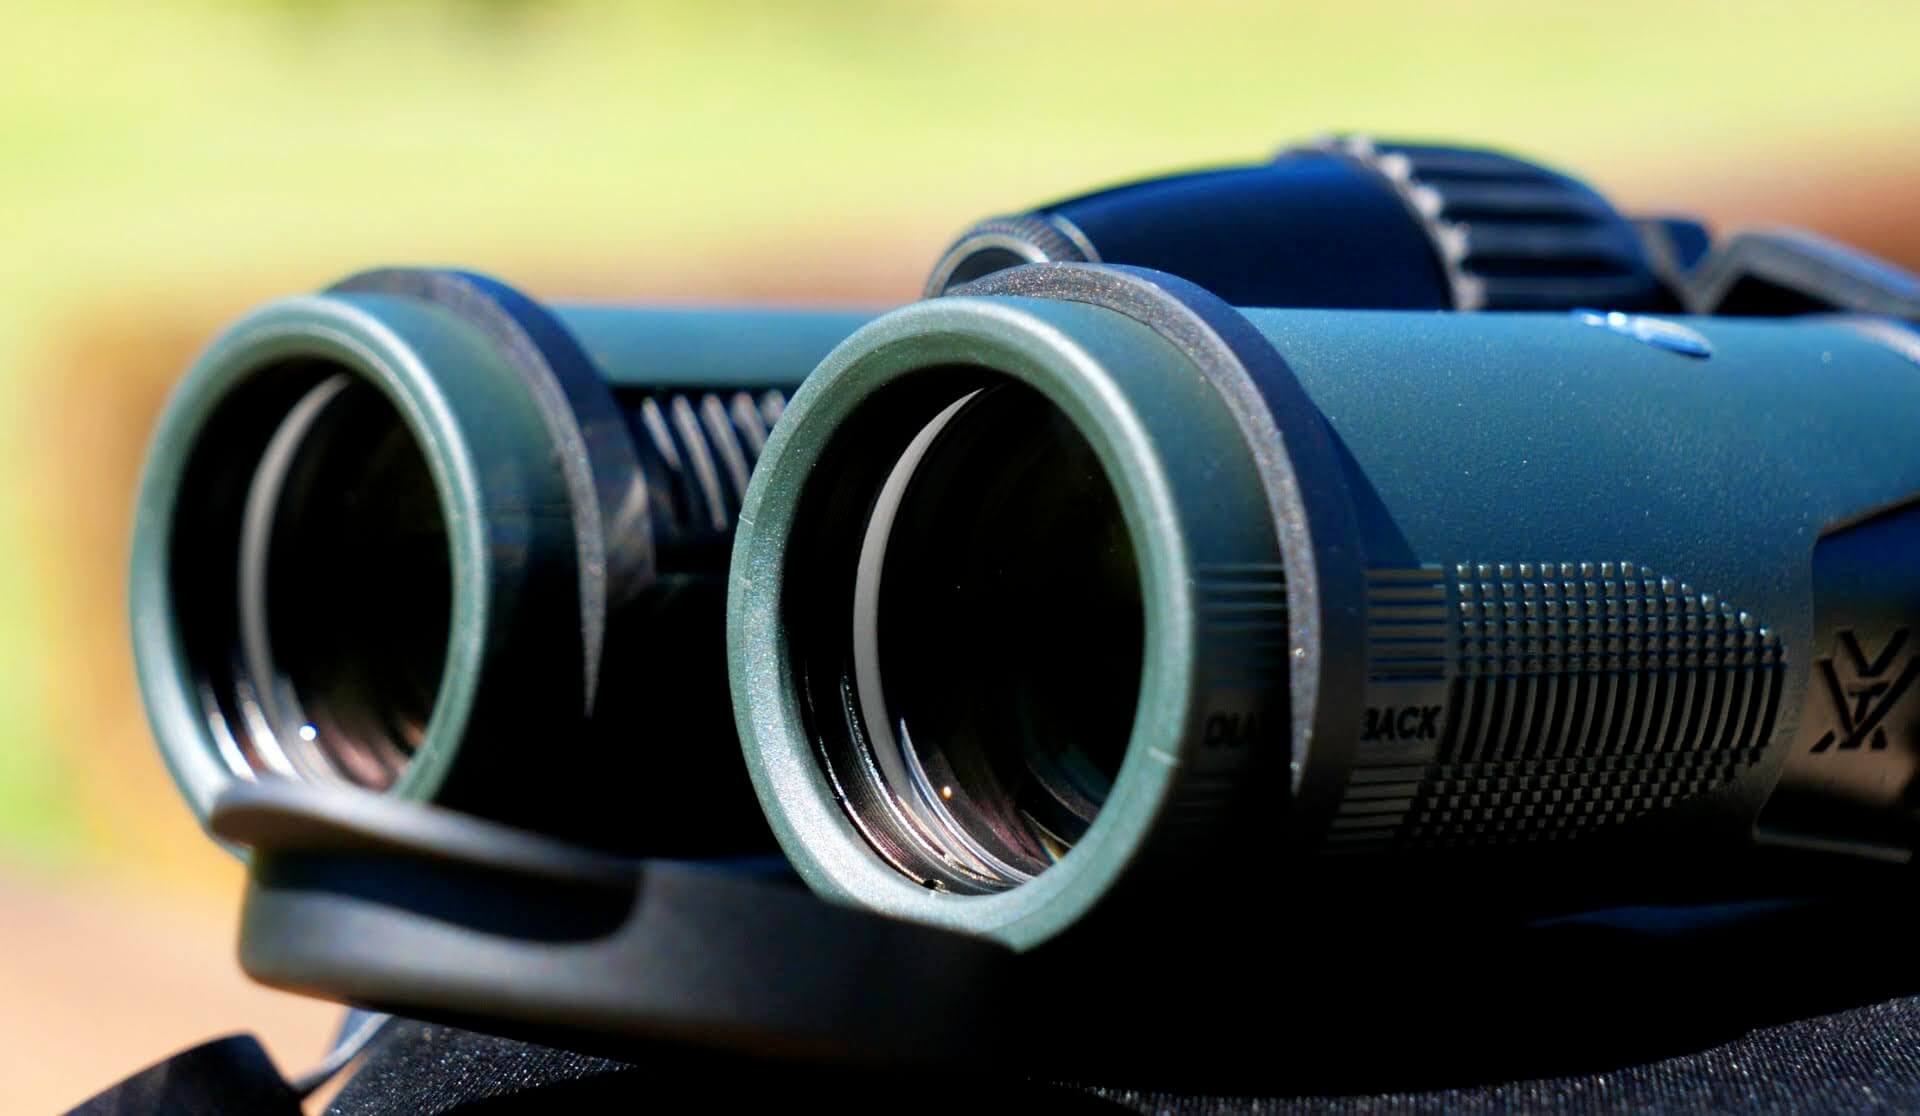 Vortex Vanquish 8×26 binoculars. Source: Rigad